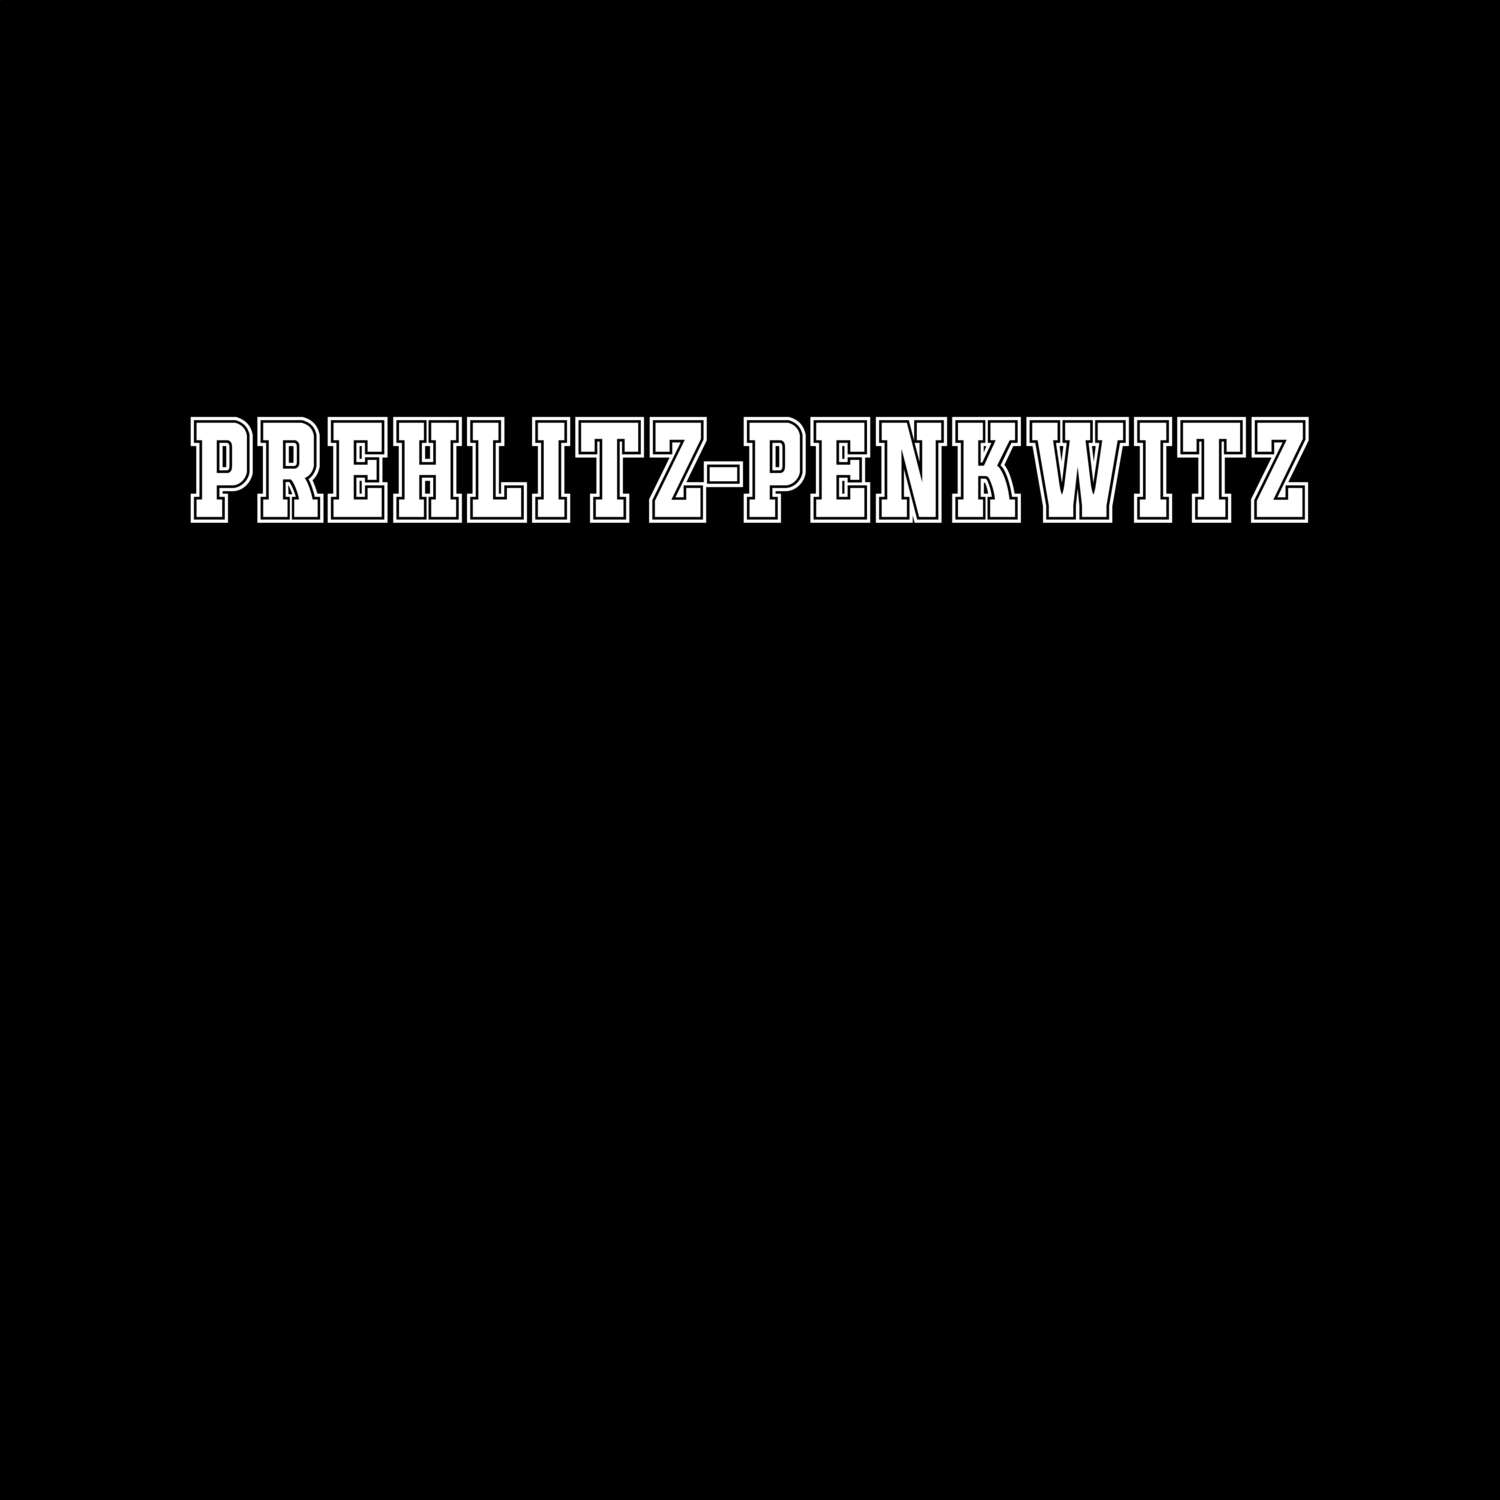 Prehlitz-Penkwitz T-Shirt »Classic«